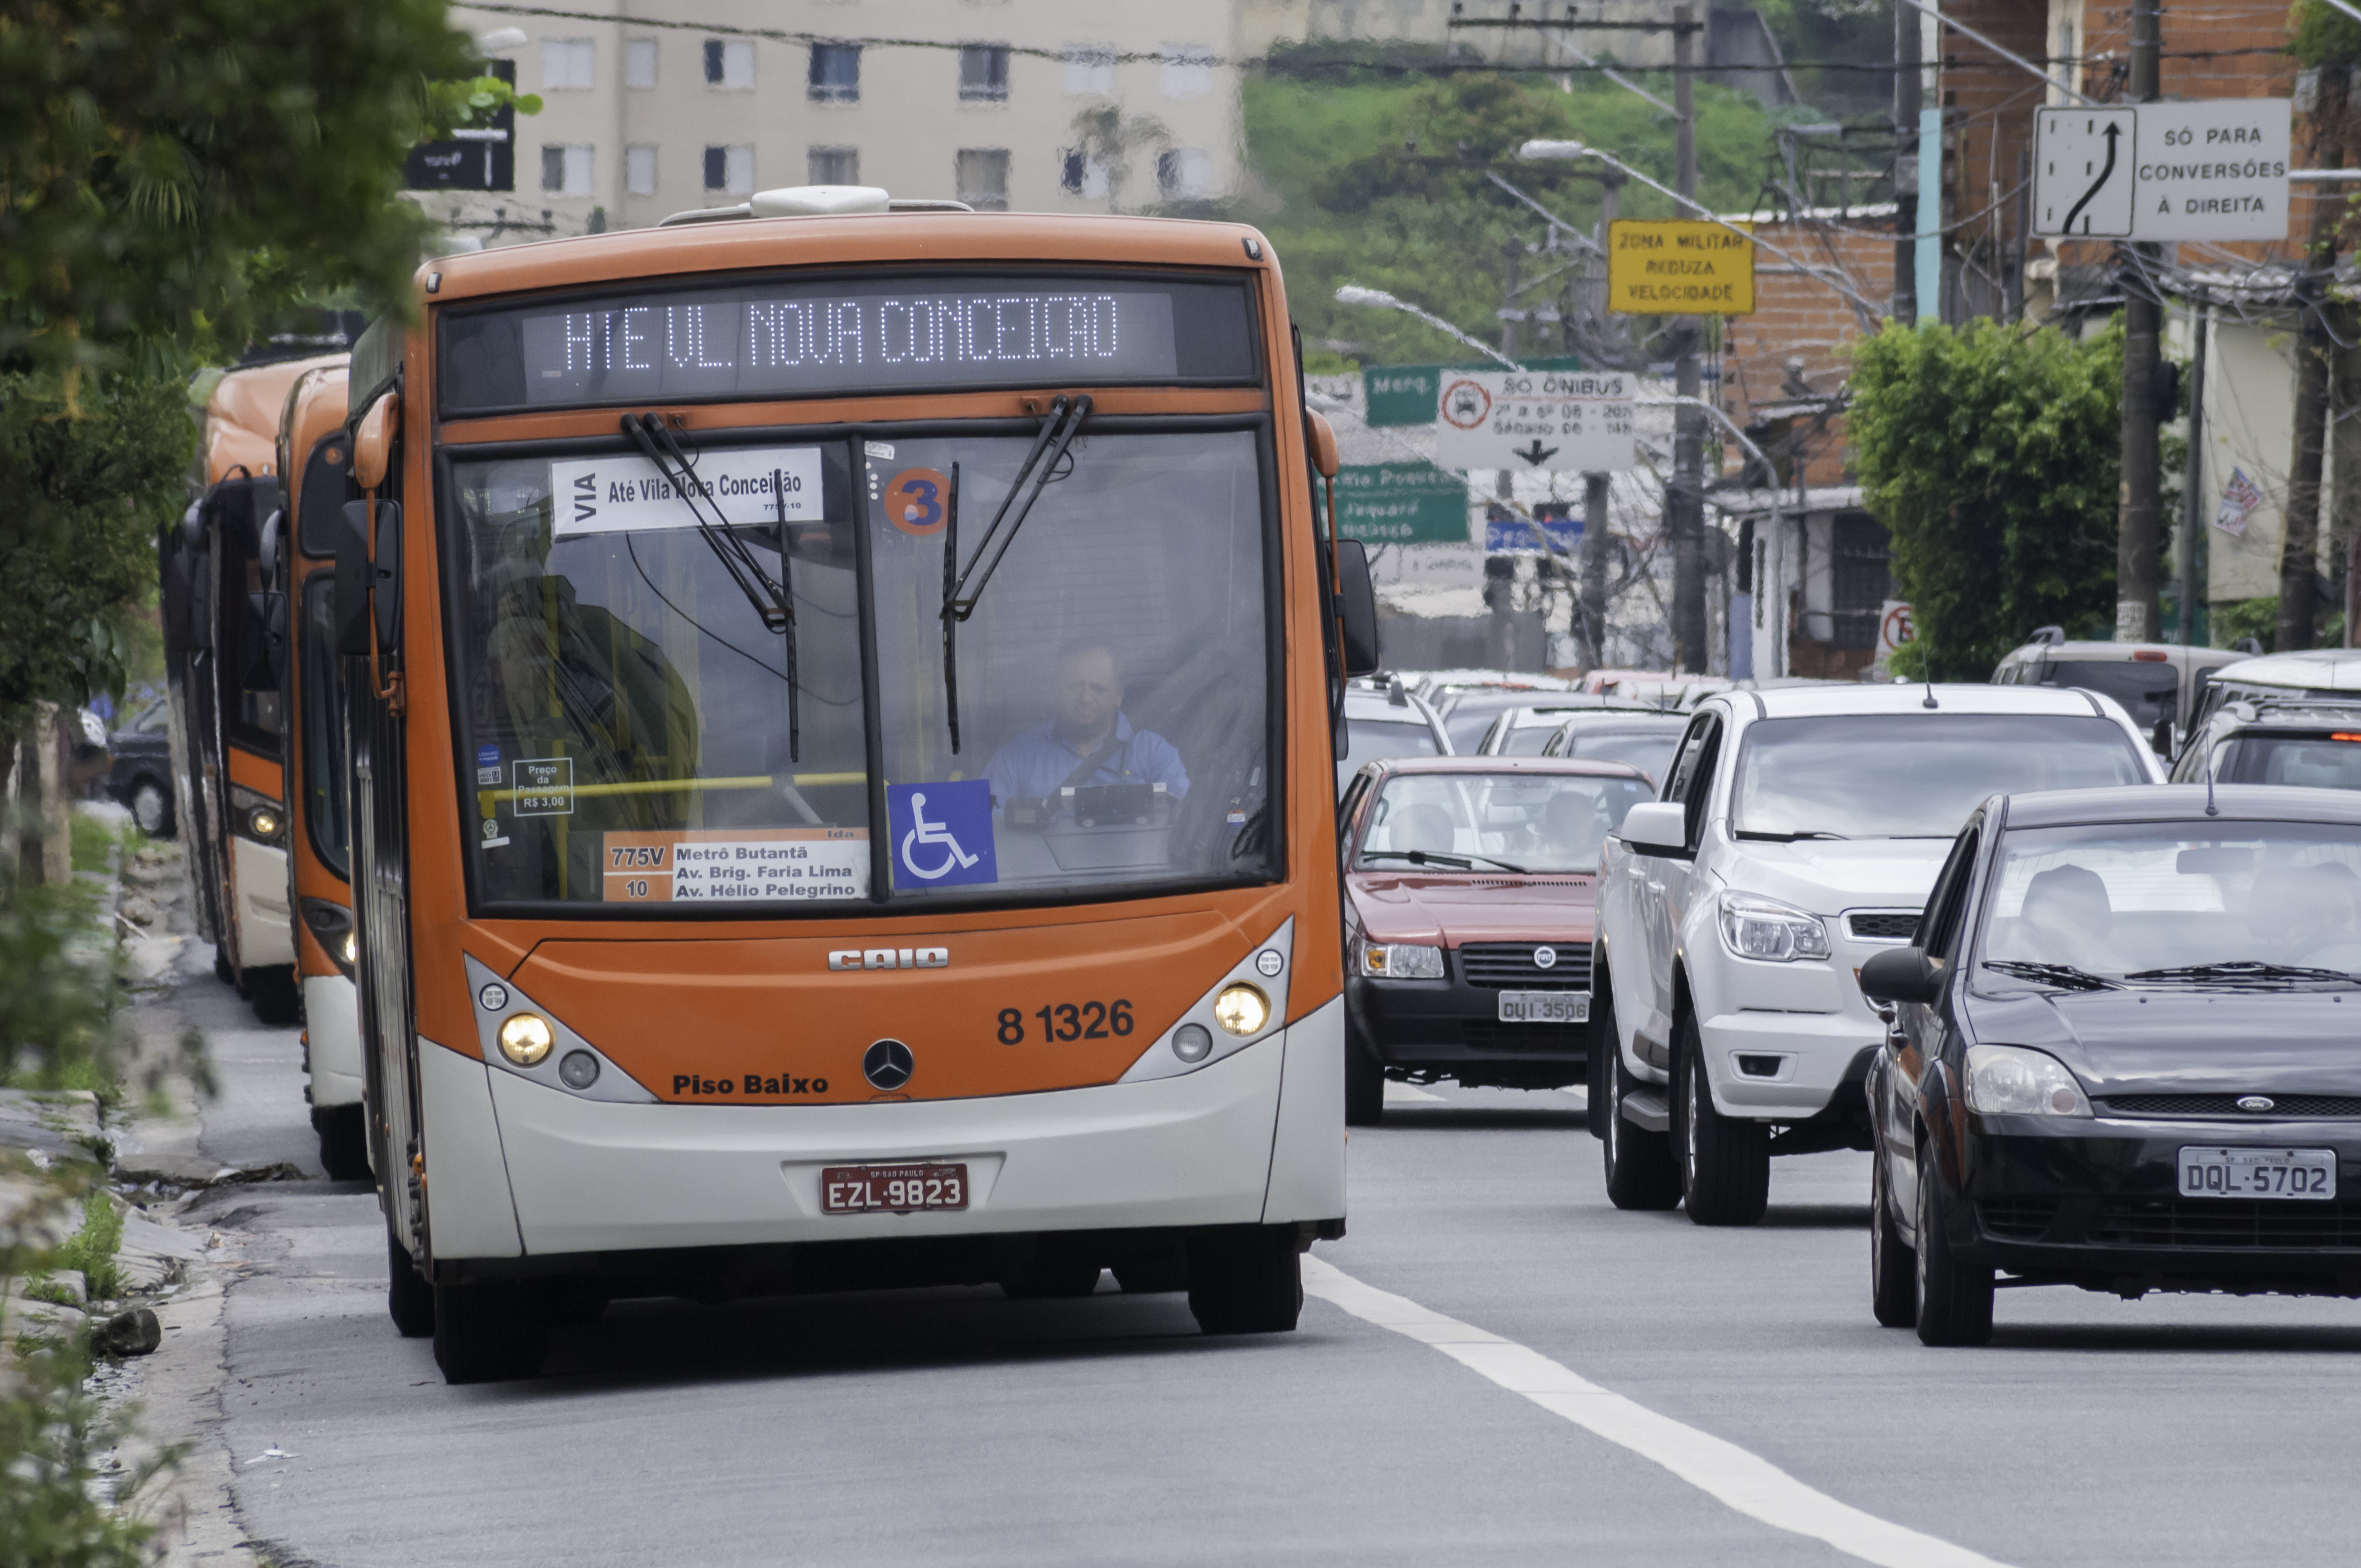 Transport in São Paulo